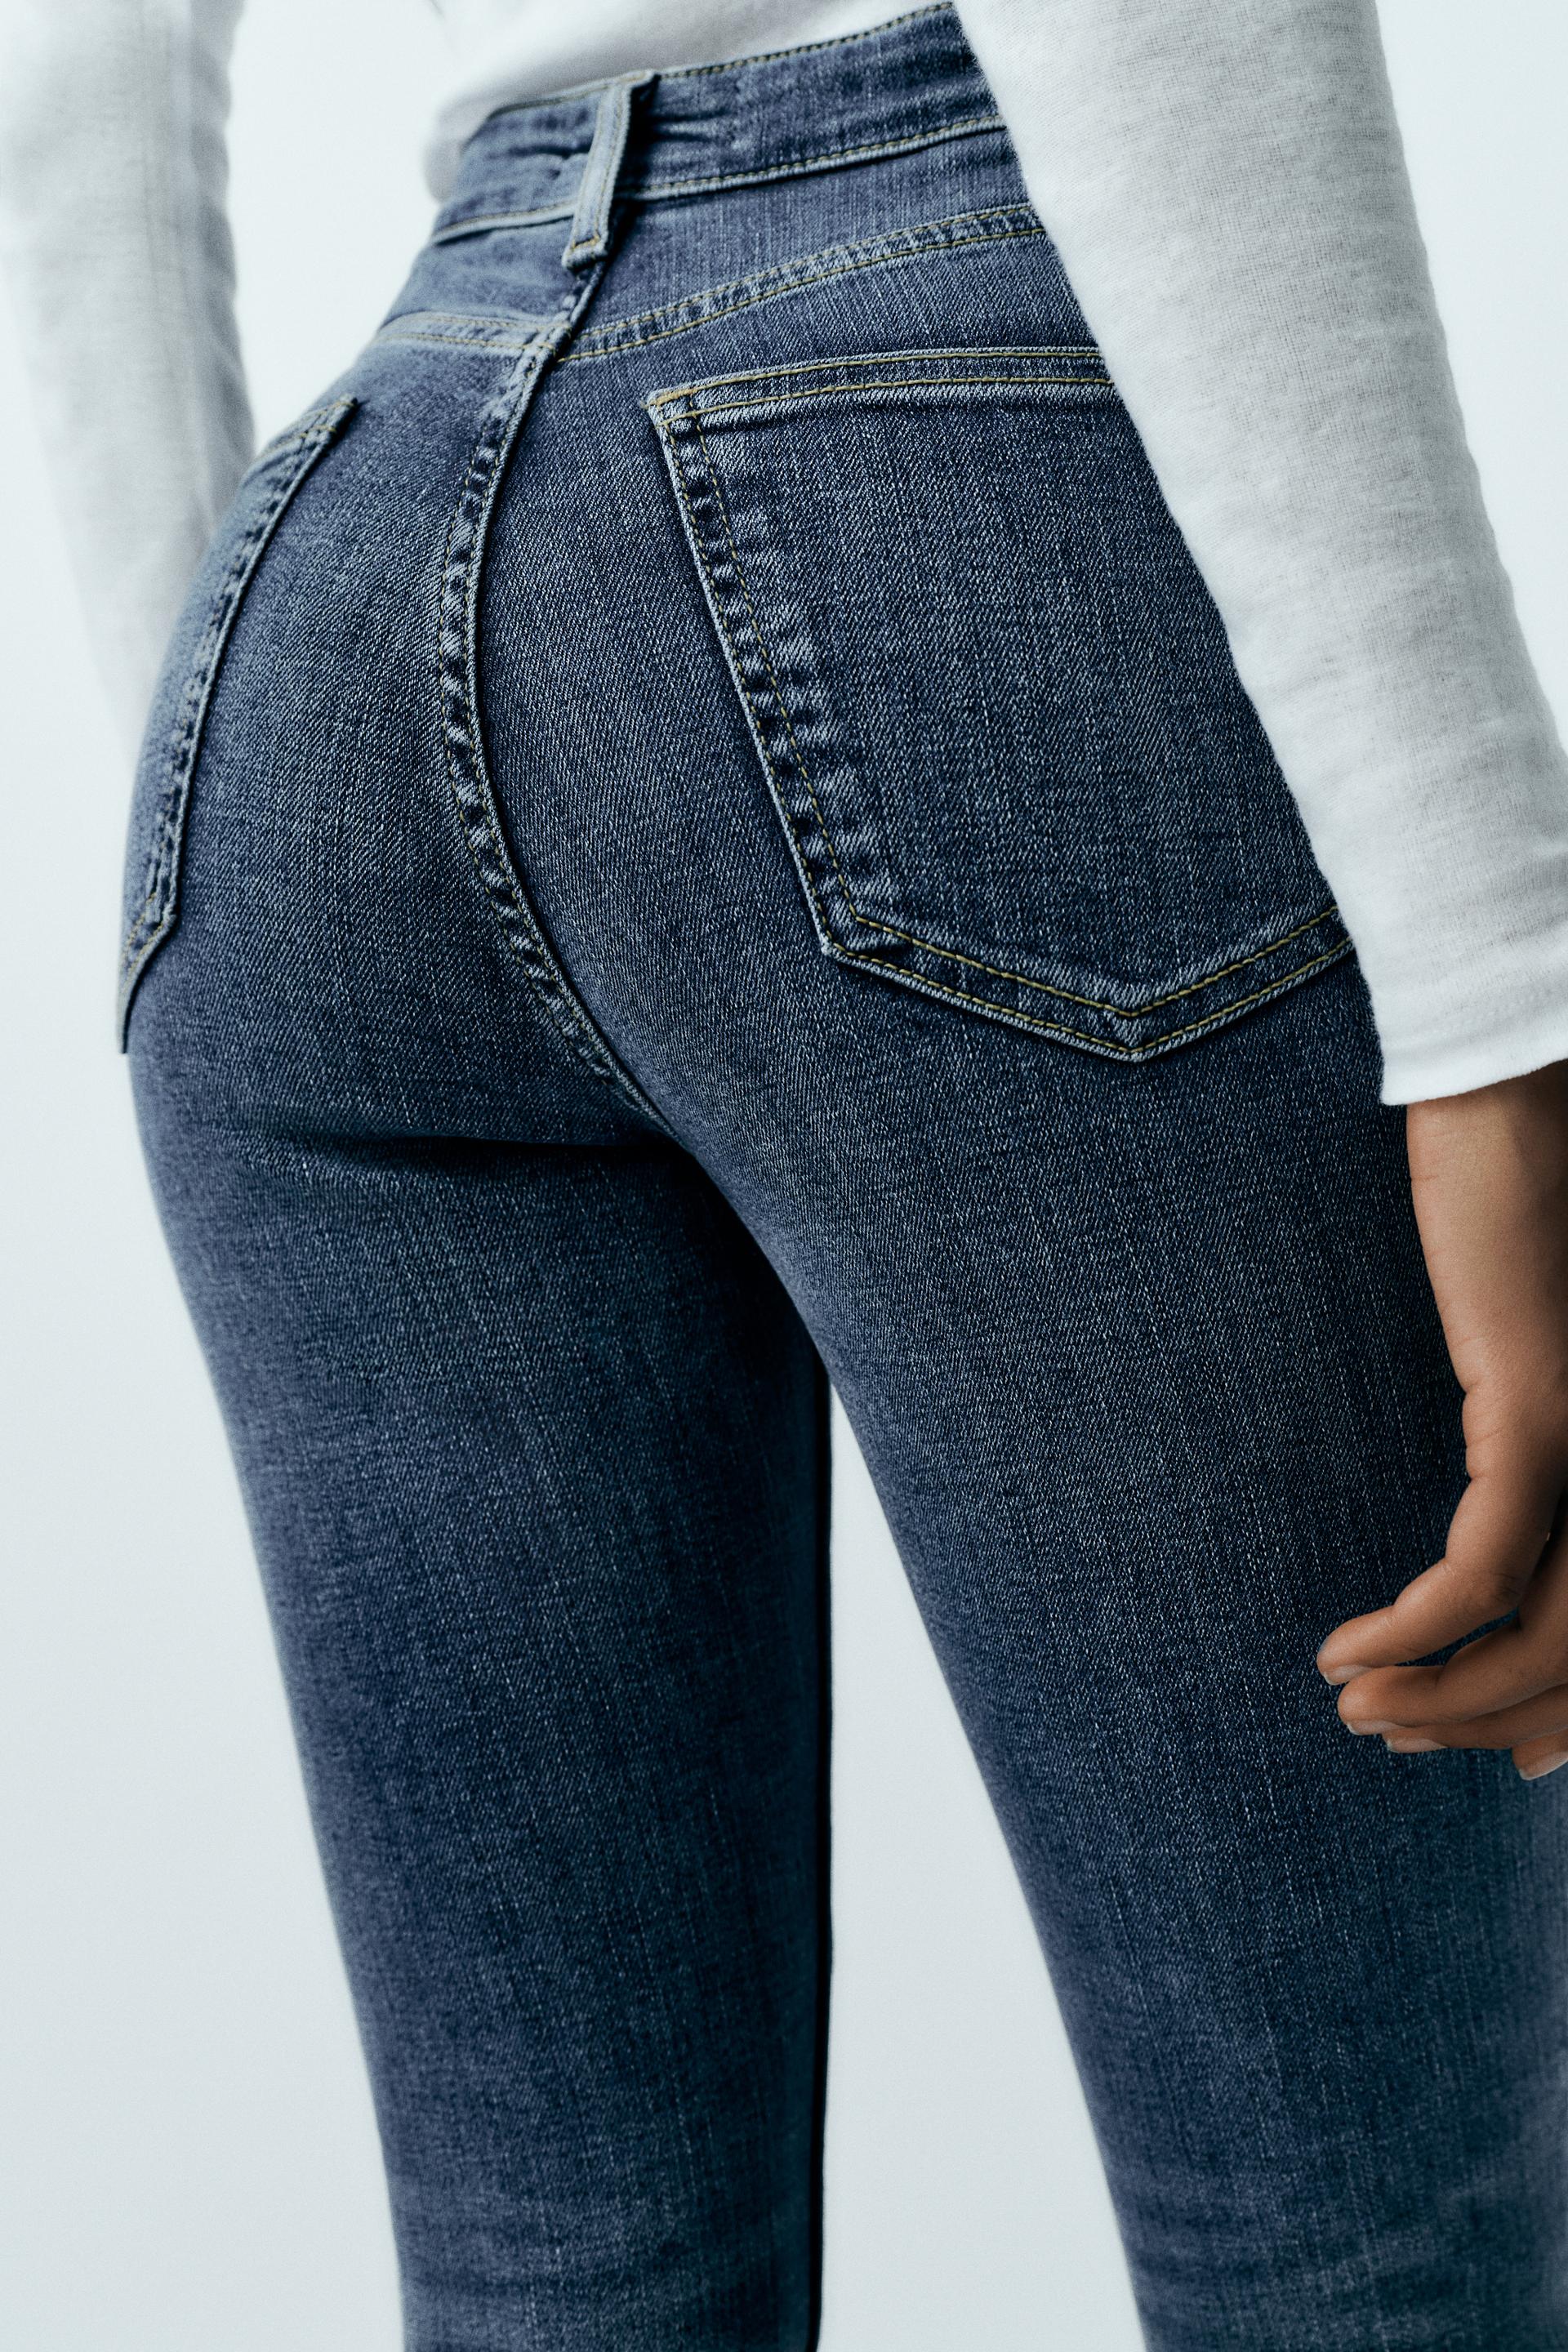 Daytrip Refined Contour Ultra High Skinny Jean